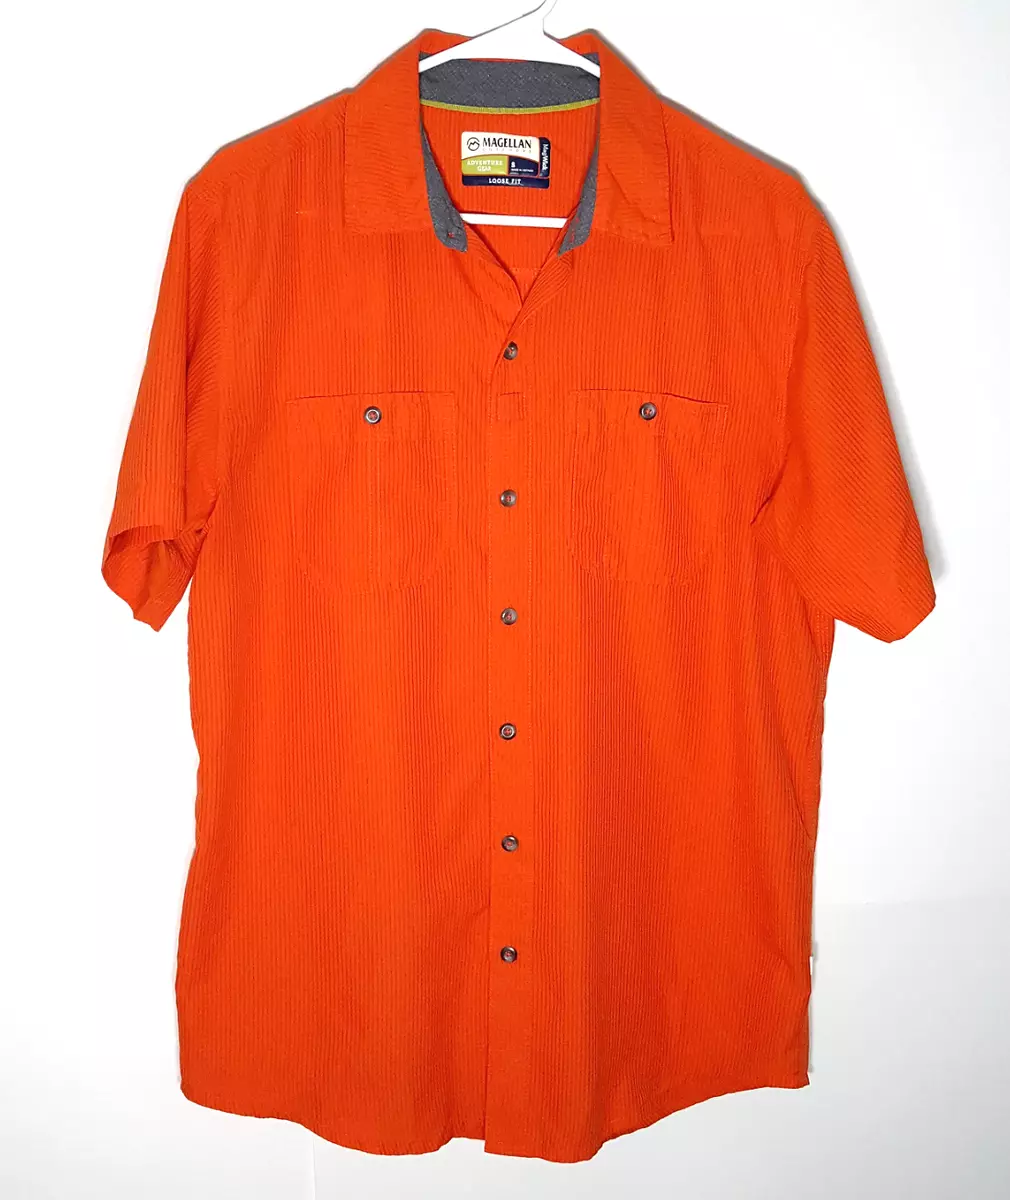 Magellan Vented Fishing Shirt, Orange Collared Casual Outdoors, Mens  Small